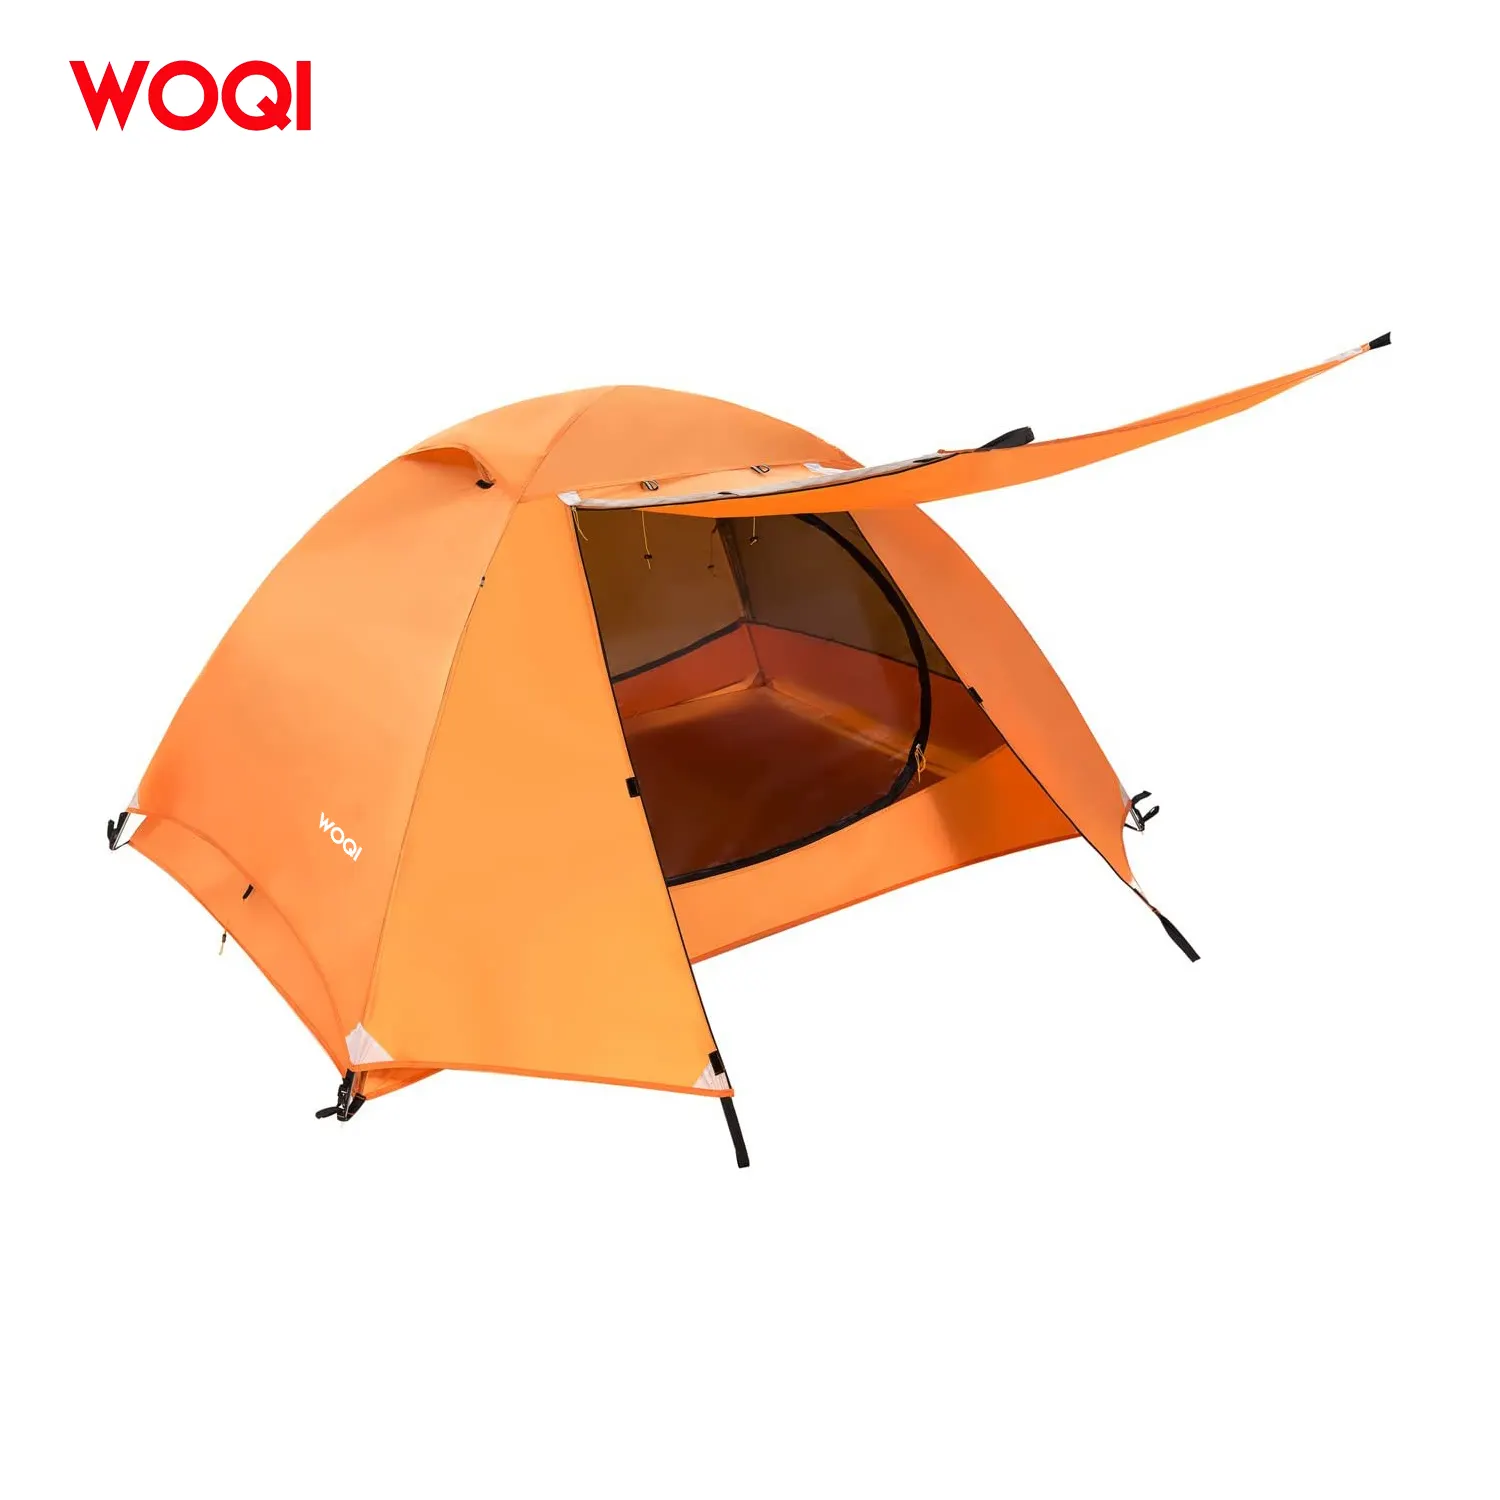 WOQI tenda Kemah ukuran besar mudah diatur, tenda berkemah luar ruangan untuk keluarga, mendaki gunung, dan glamping